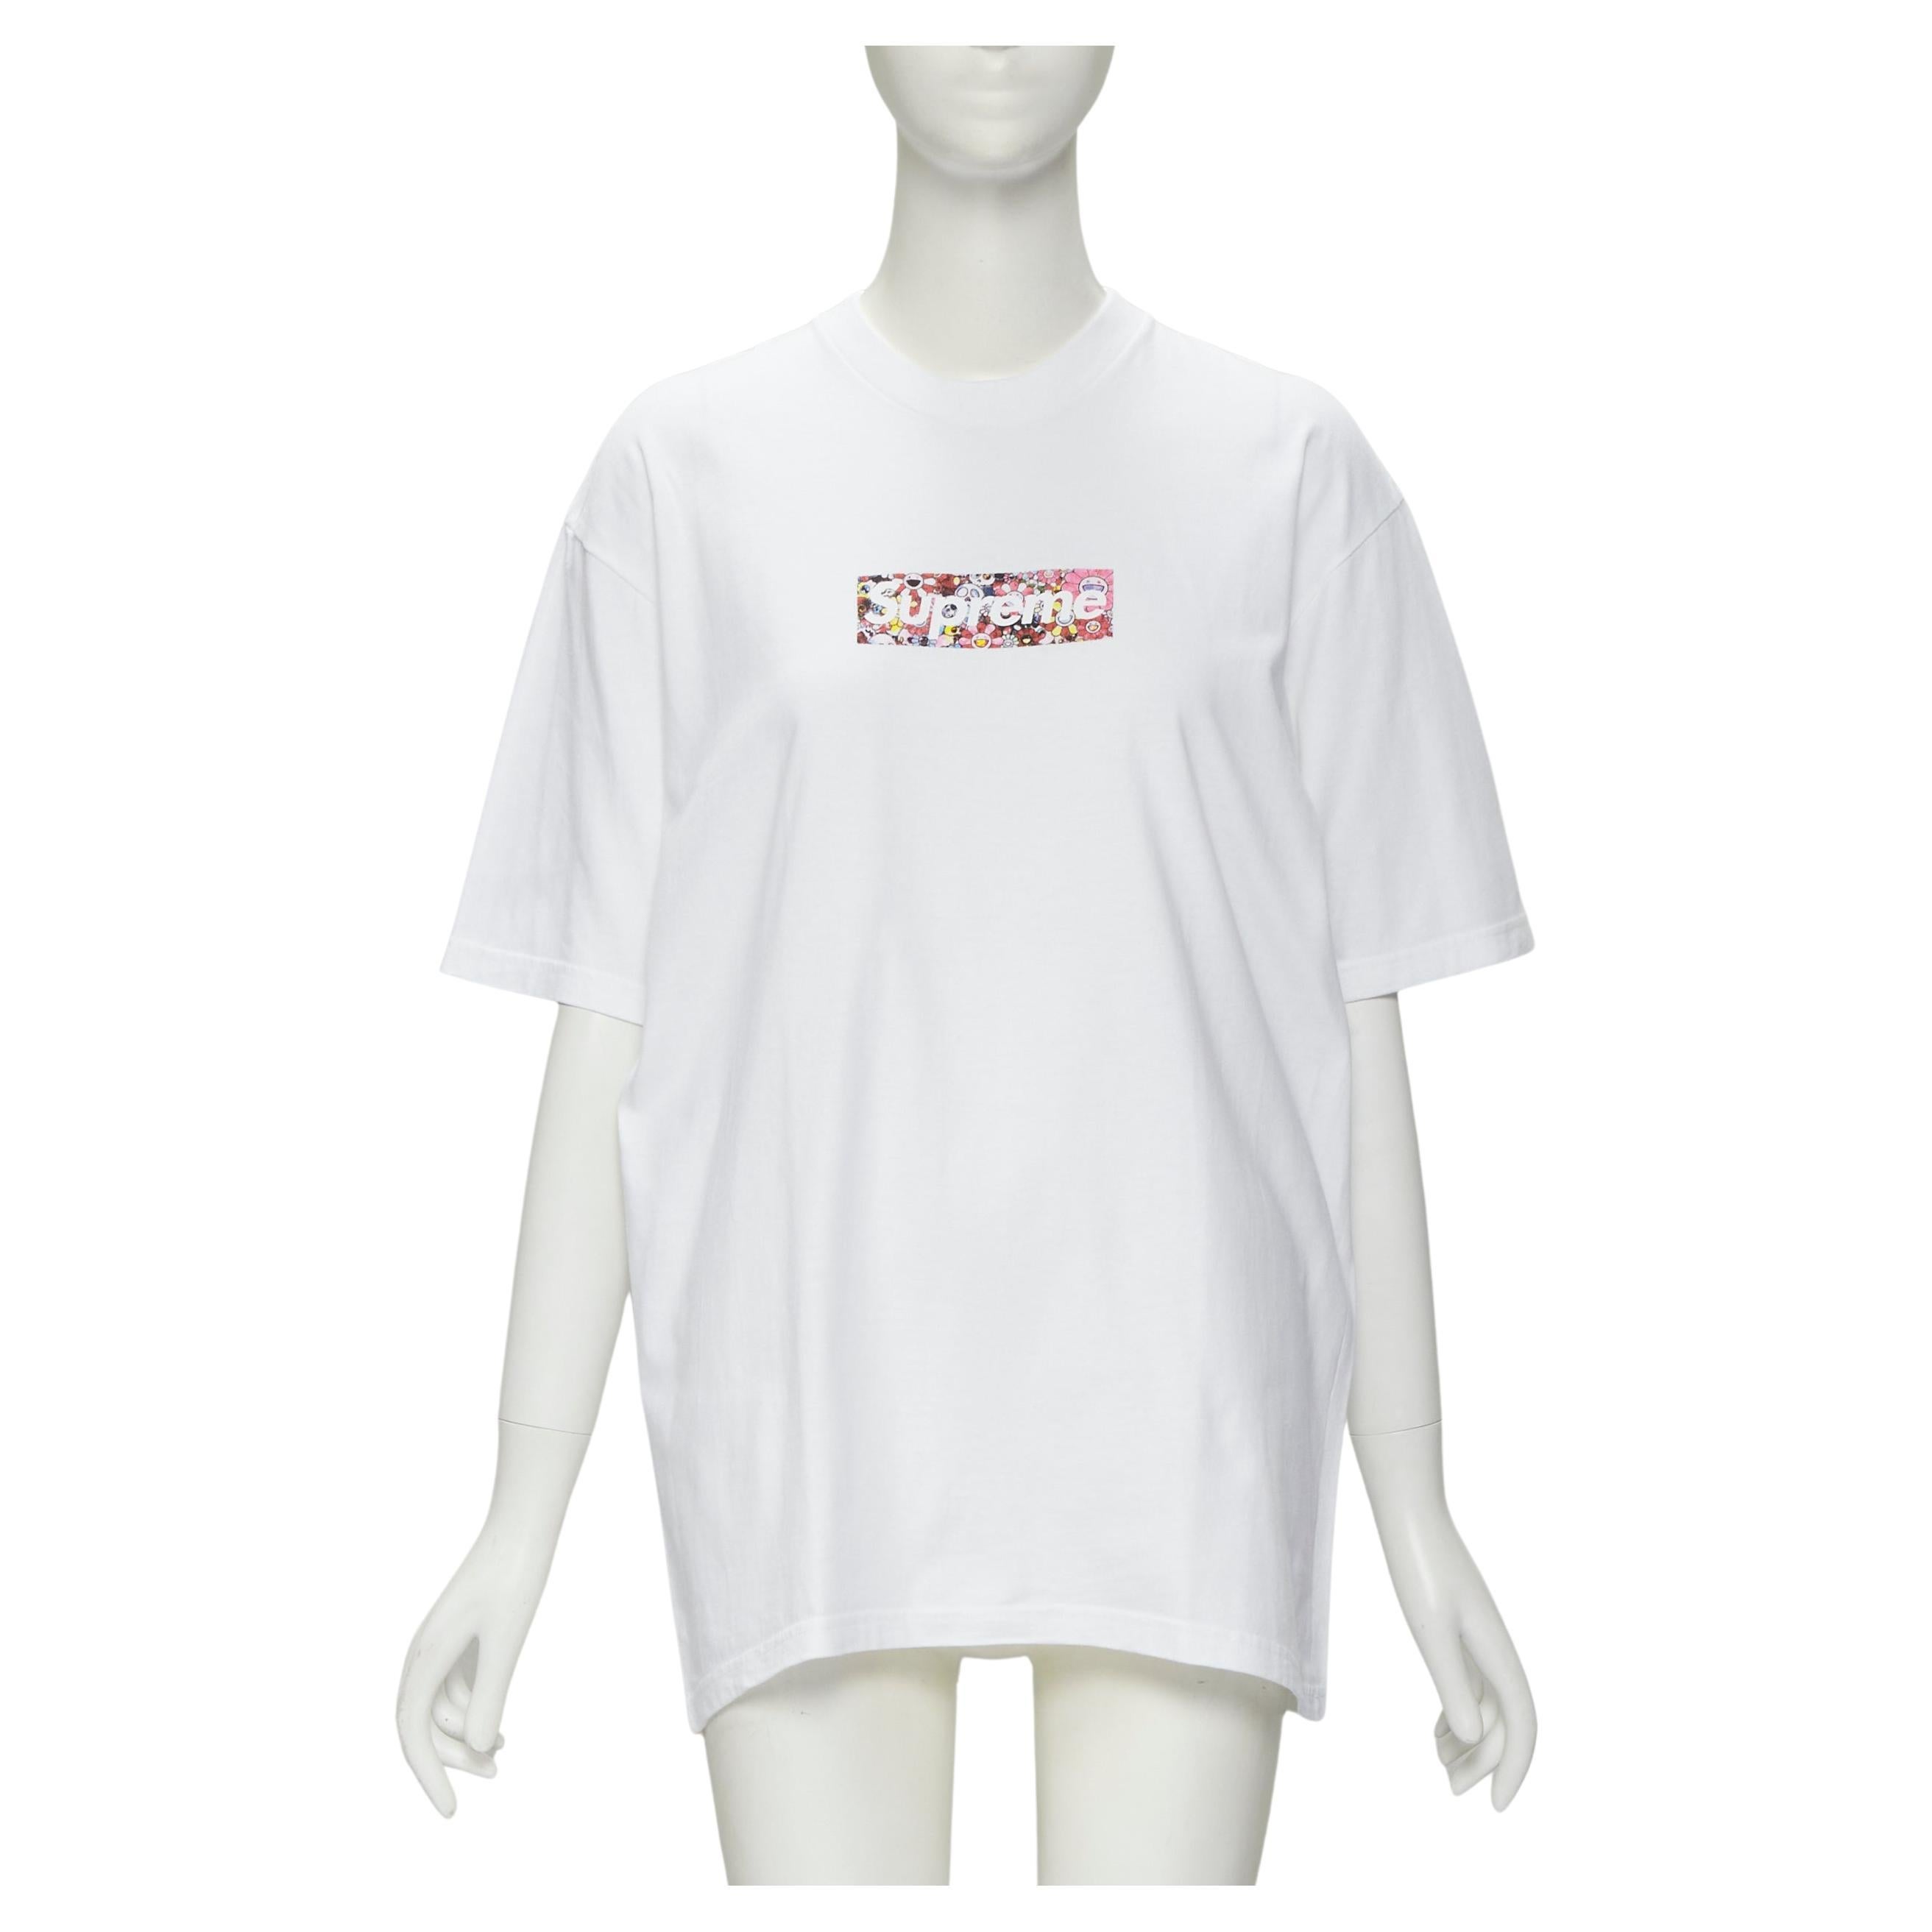 SUPREME Murakami Relief Fund floral box logo white cotton tshirt M For Sale